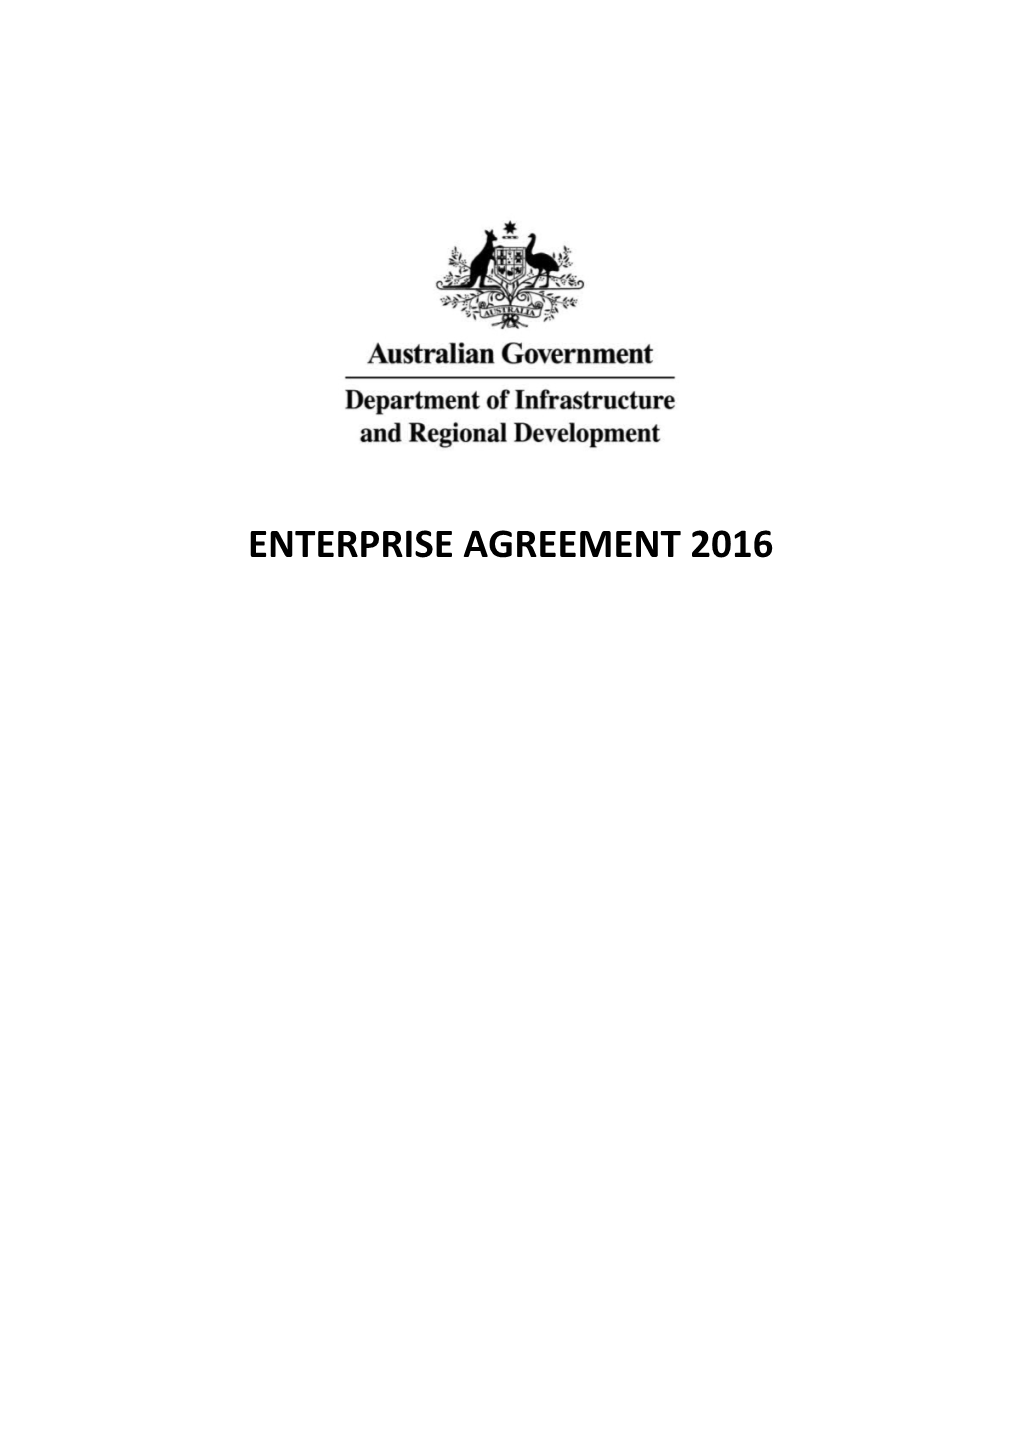 Enterprise Agreement 2016